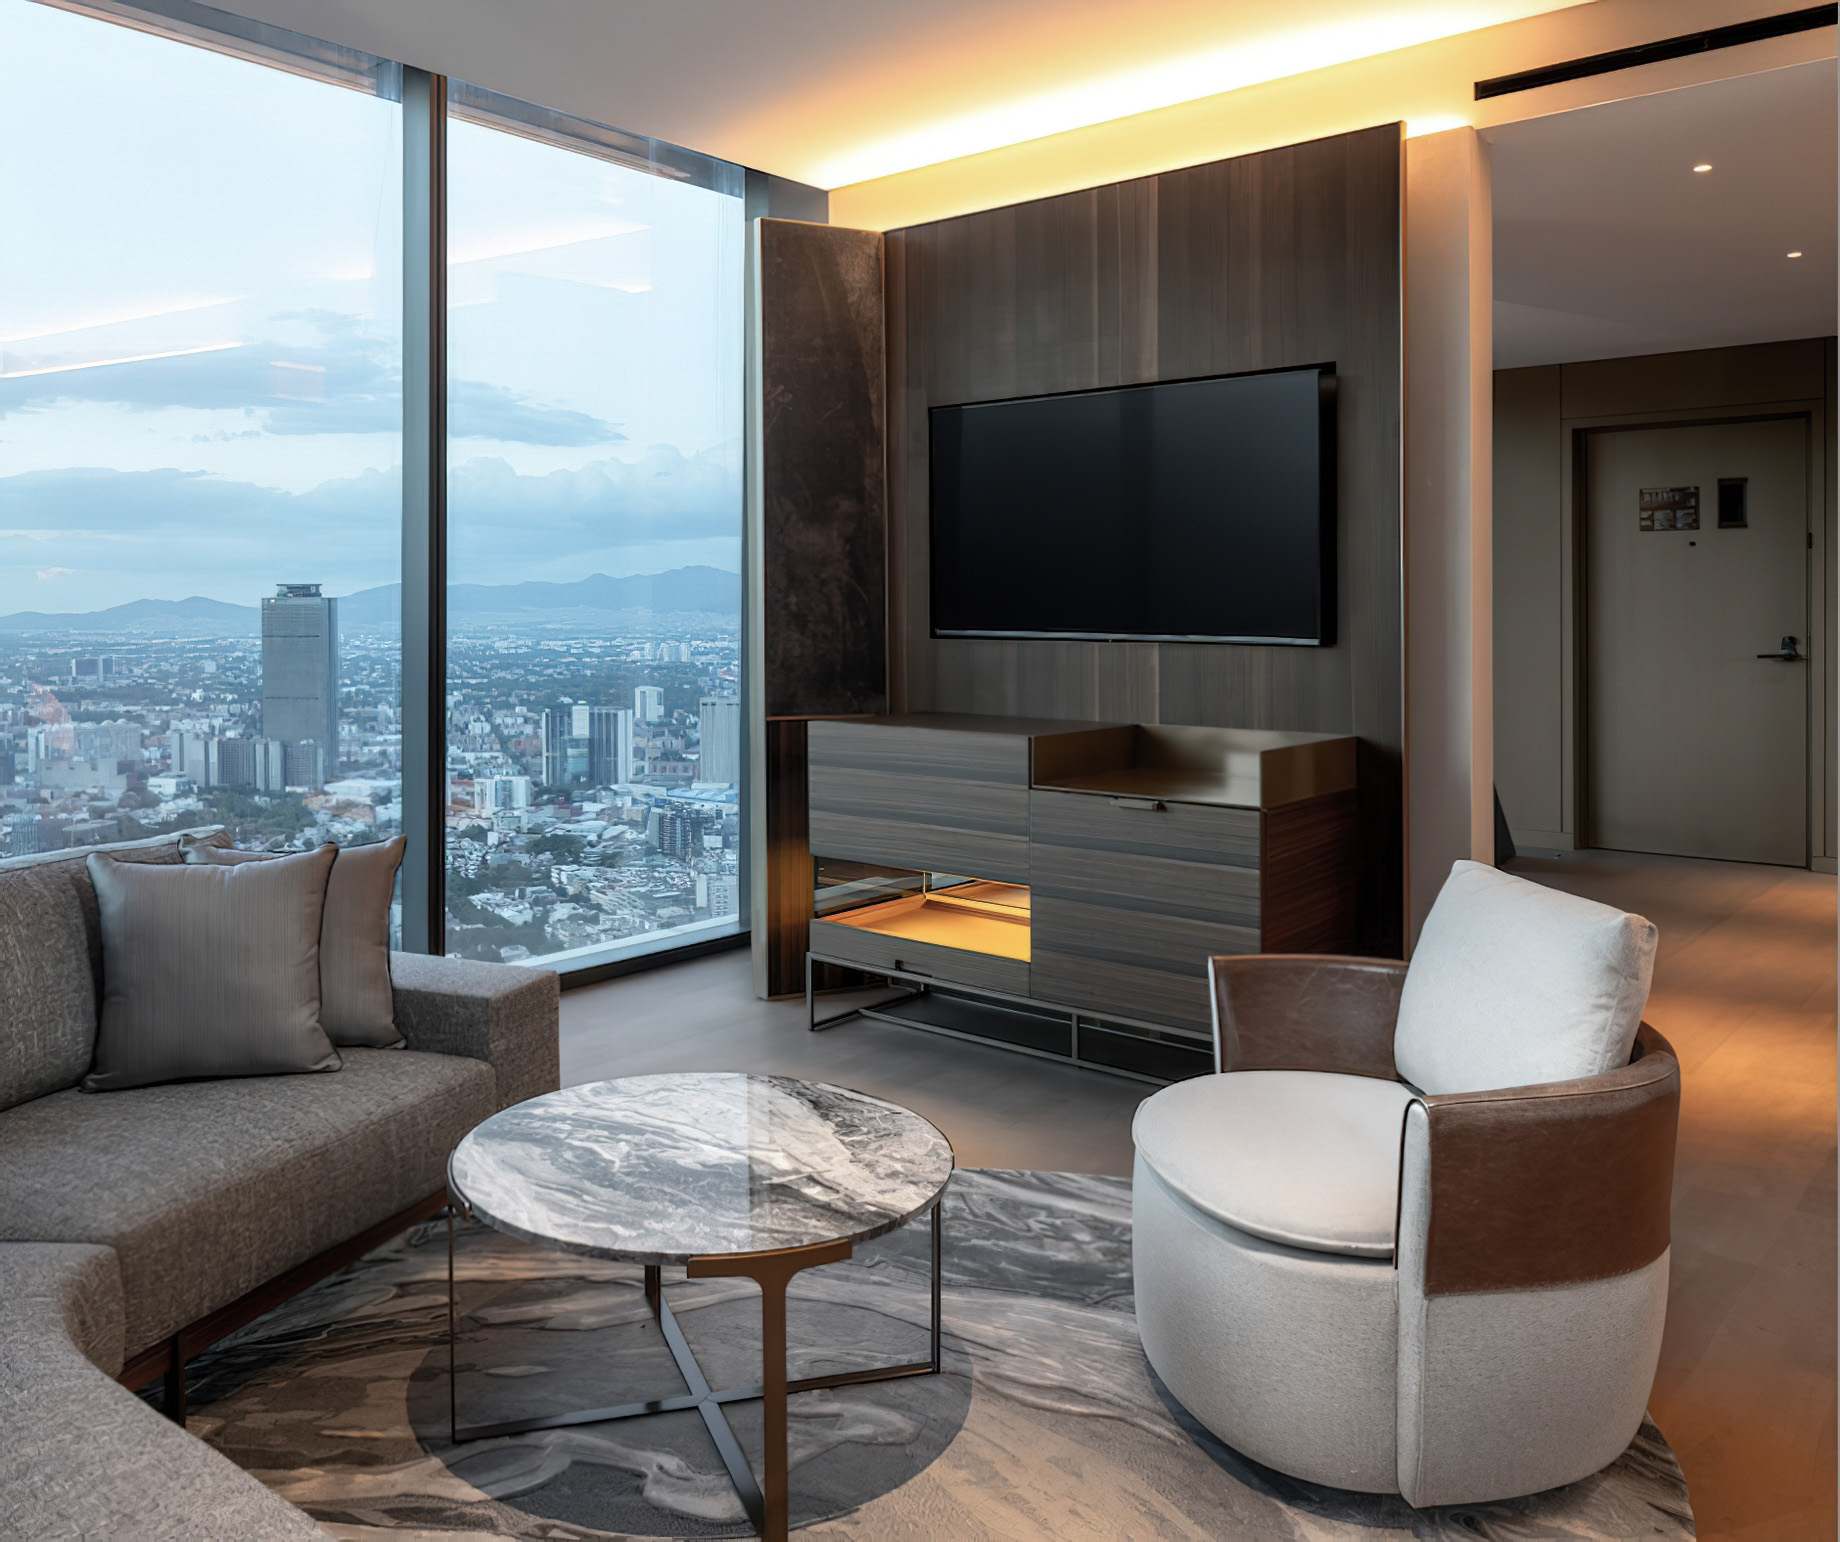 The Ritz-Carlton, Mexico City Hotel - Mexico City, Mexico - Suite Living Room